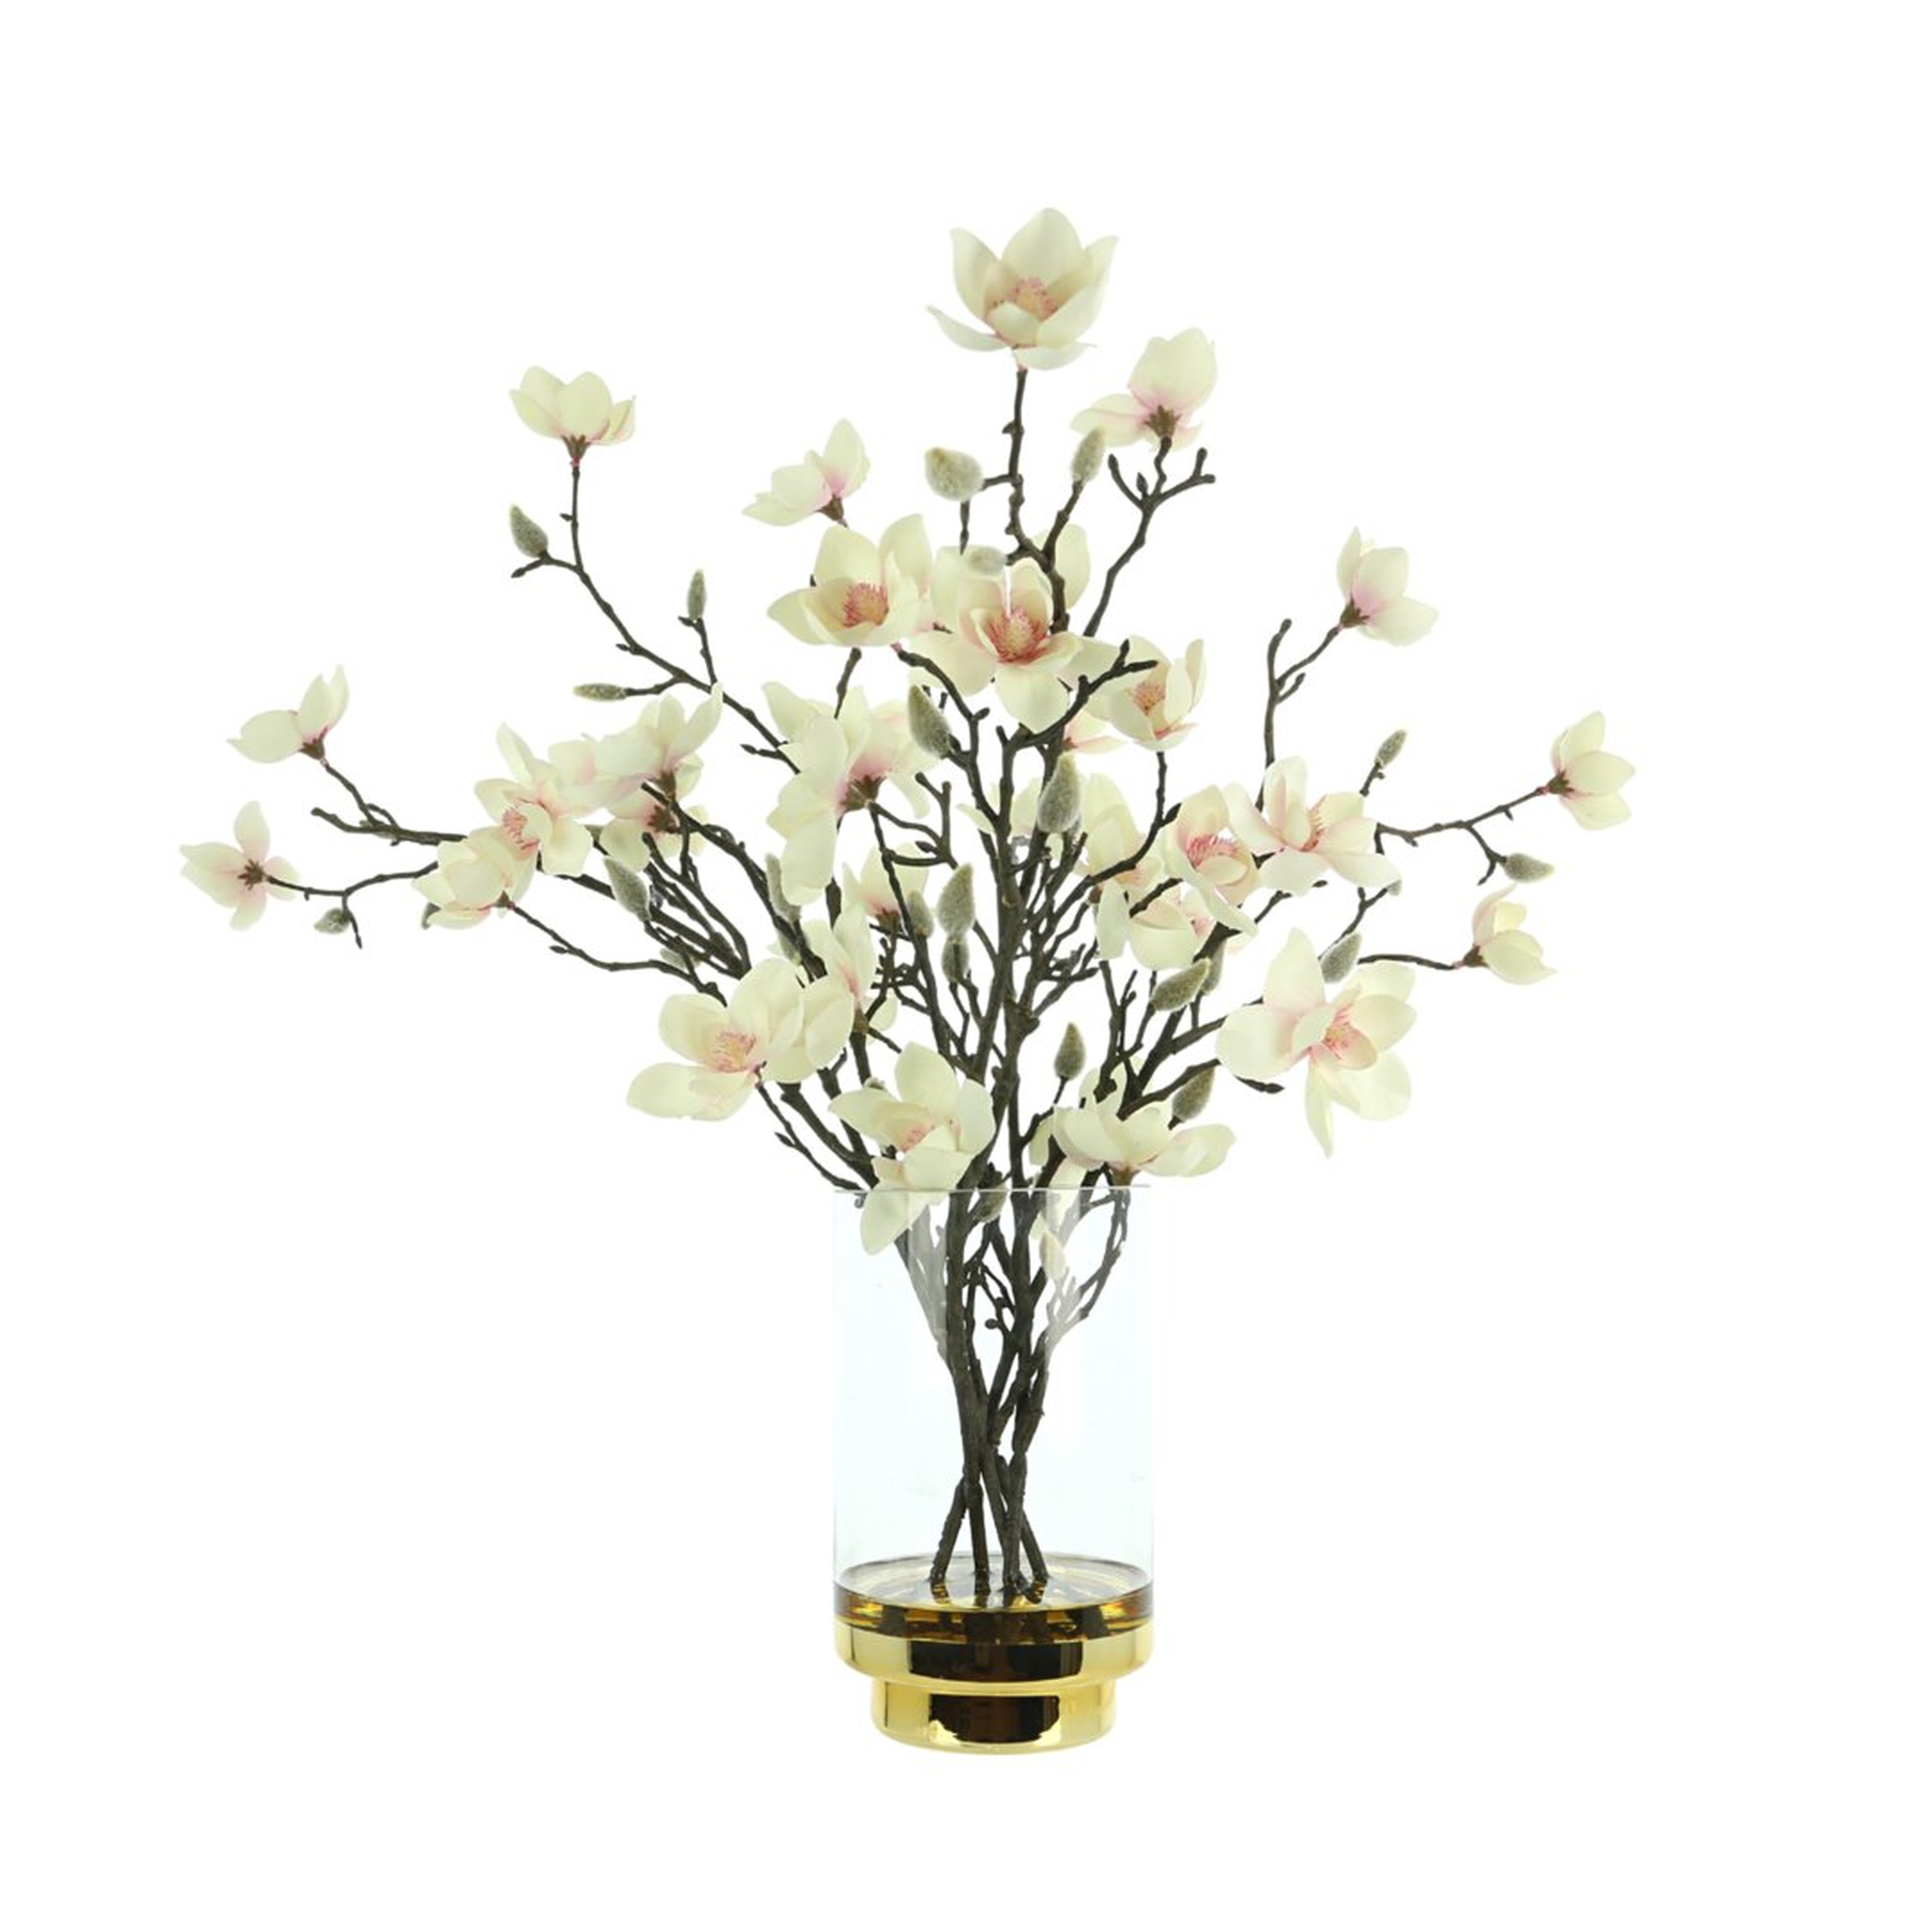 "Creative Displays, Inc. Butterfly Magnolia Floral Arrangement in Vase" - Perigold